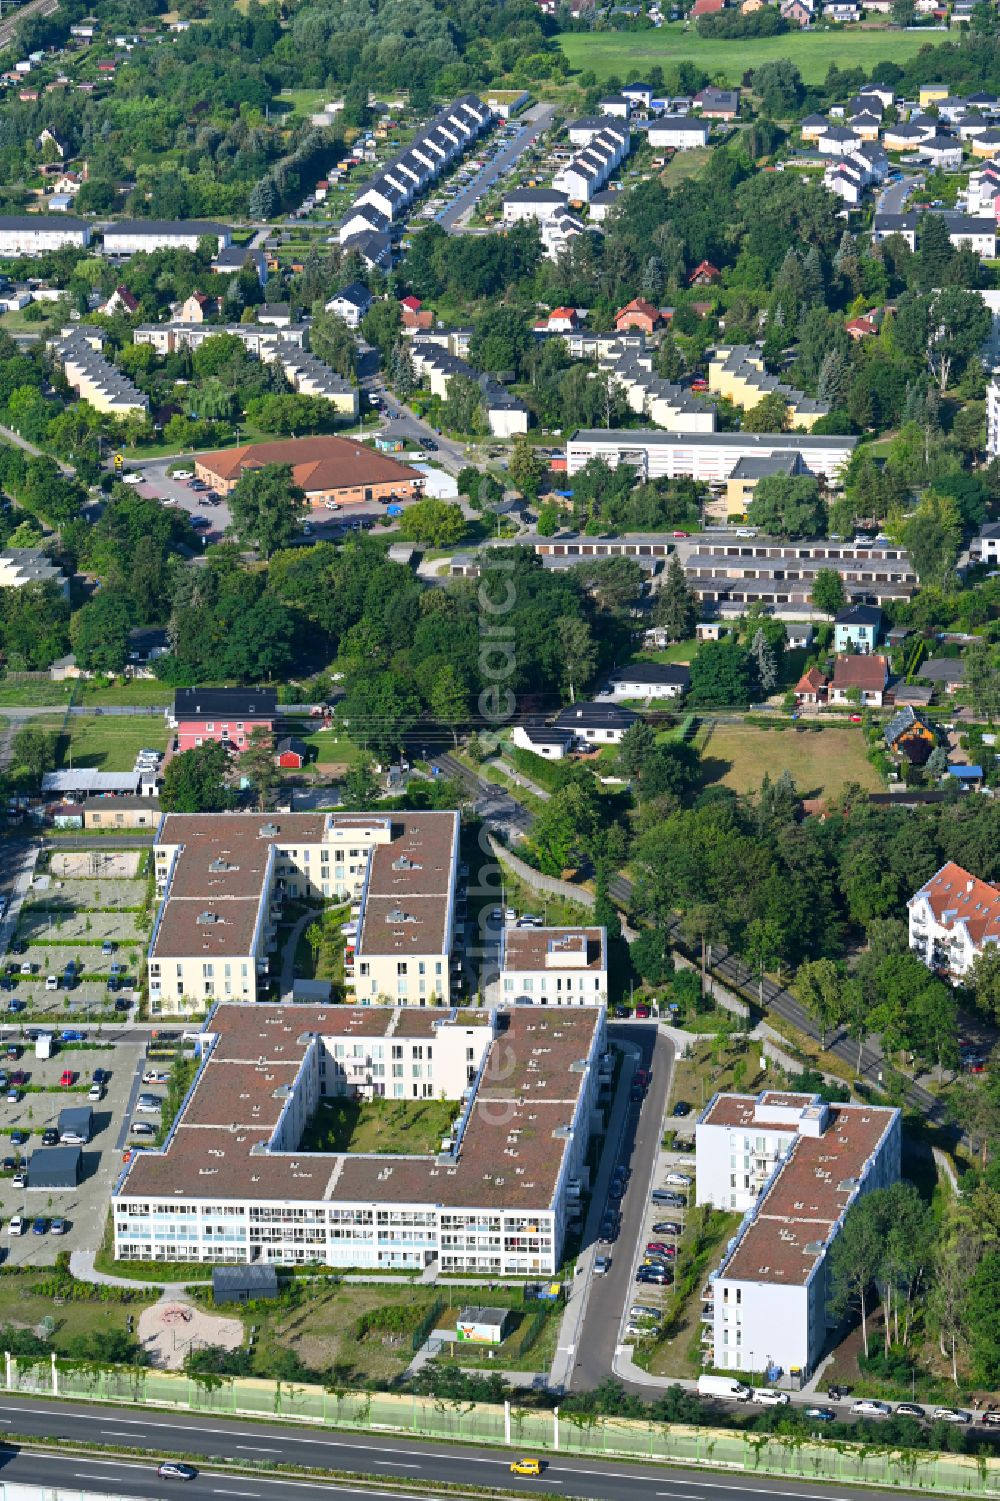 Aerial image Bernau - Multi-family residential complex Waldquartier Friedenstal-Bernau on Zepernicker Chaussee corner Lenastrasse on street Aldanstrasse in Bernau in the state Brandenburg, Germany